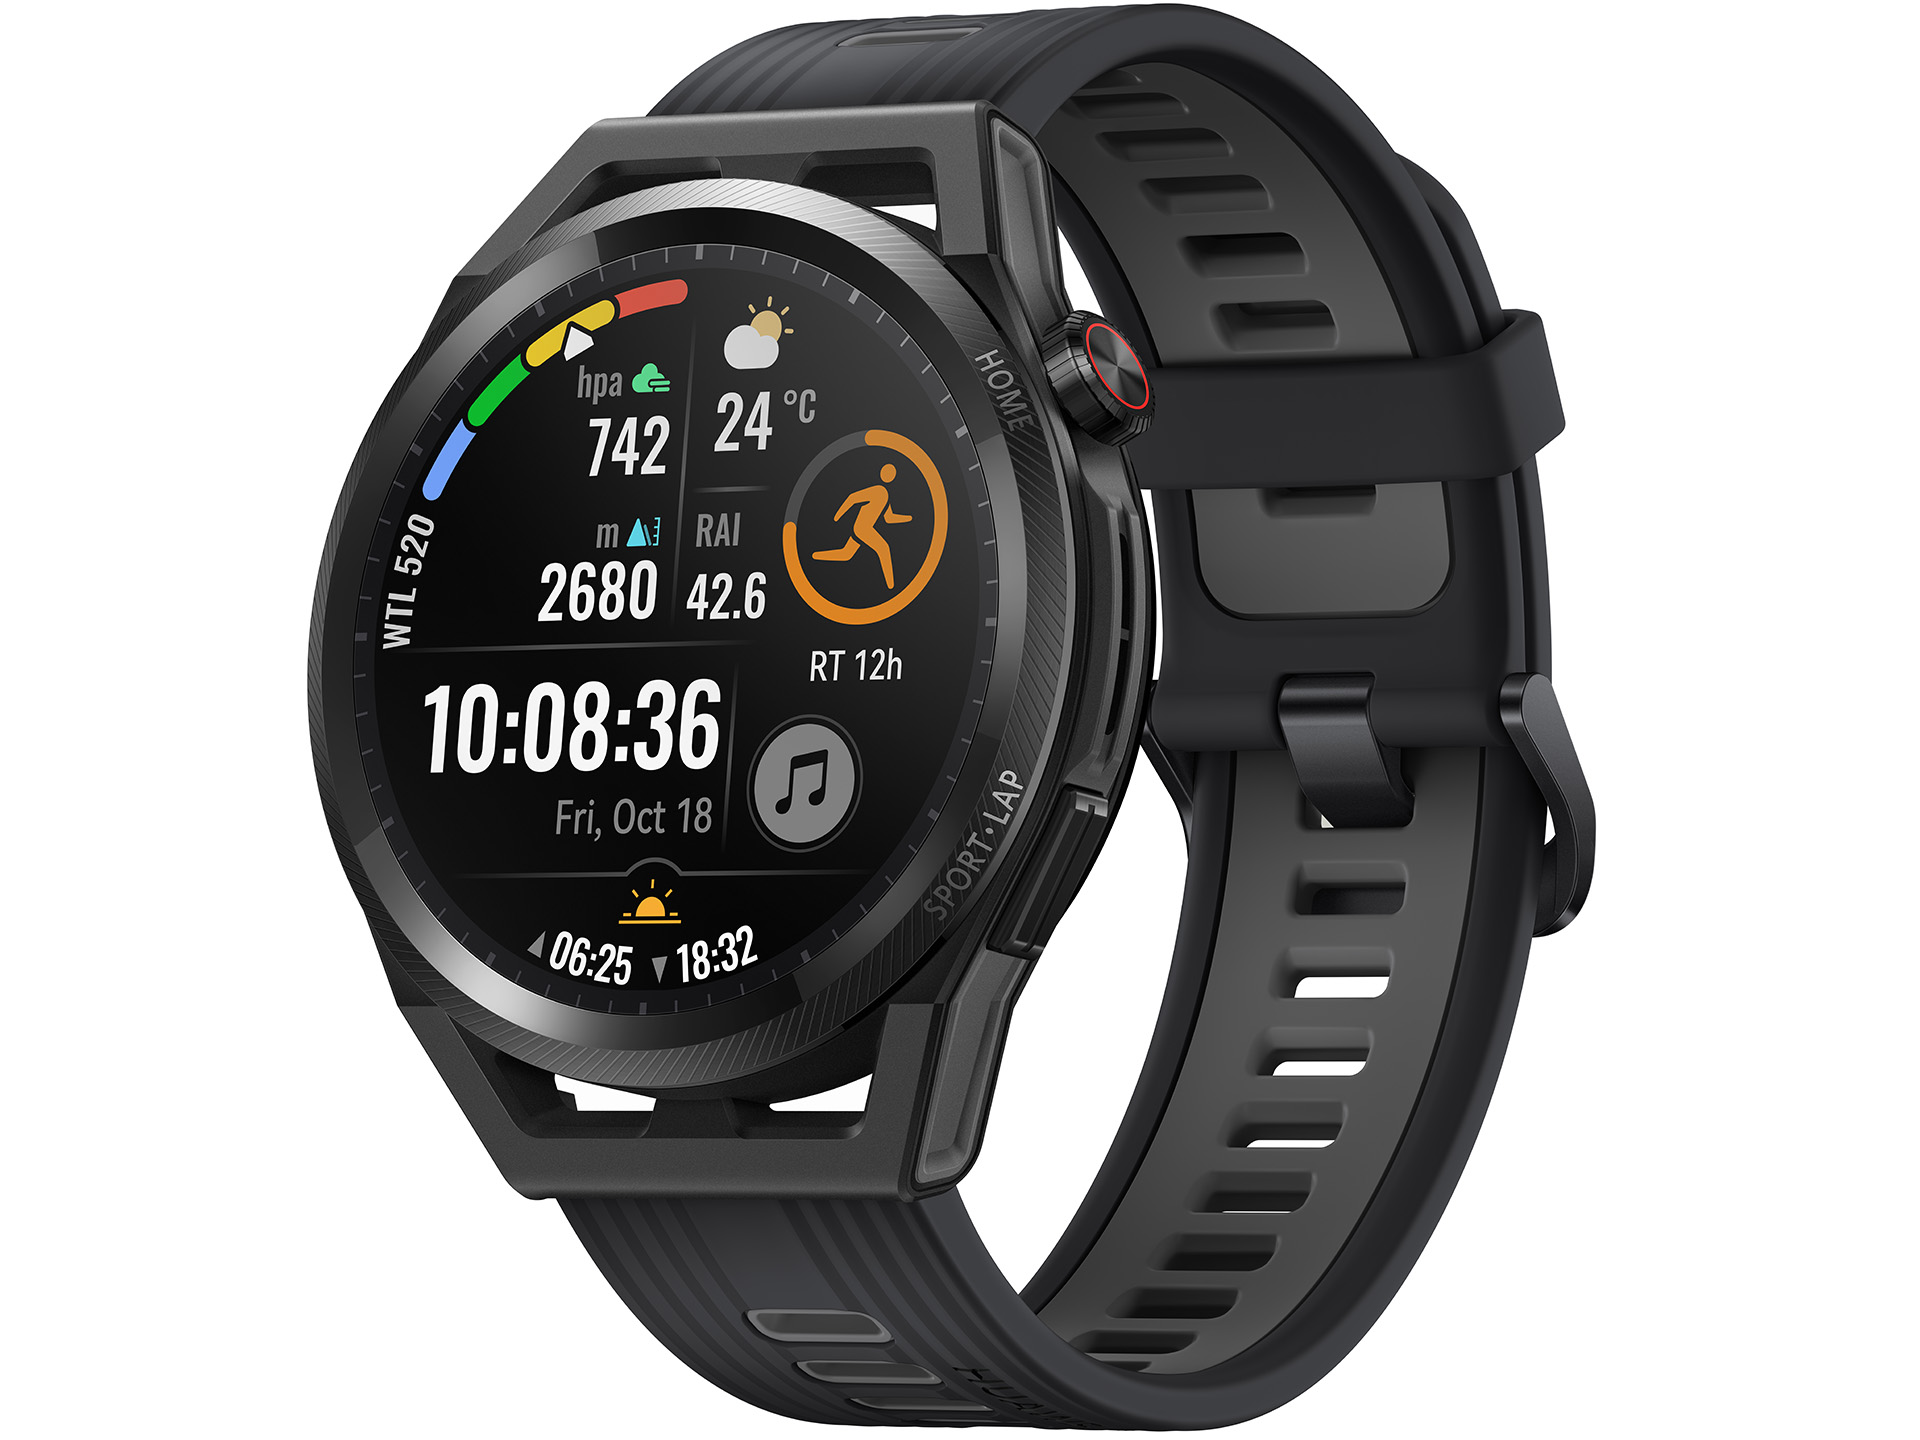 Huawei Watch GT Runner review - Smartwatch for sports fans -  NotebookCheck.net Reviews